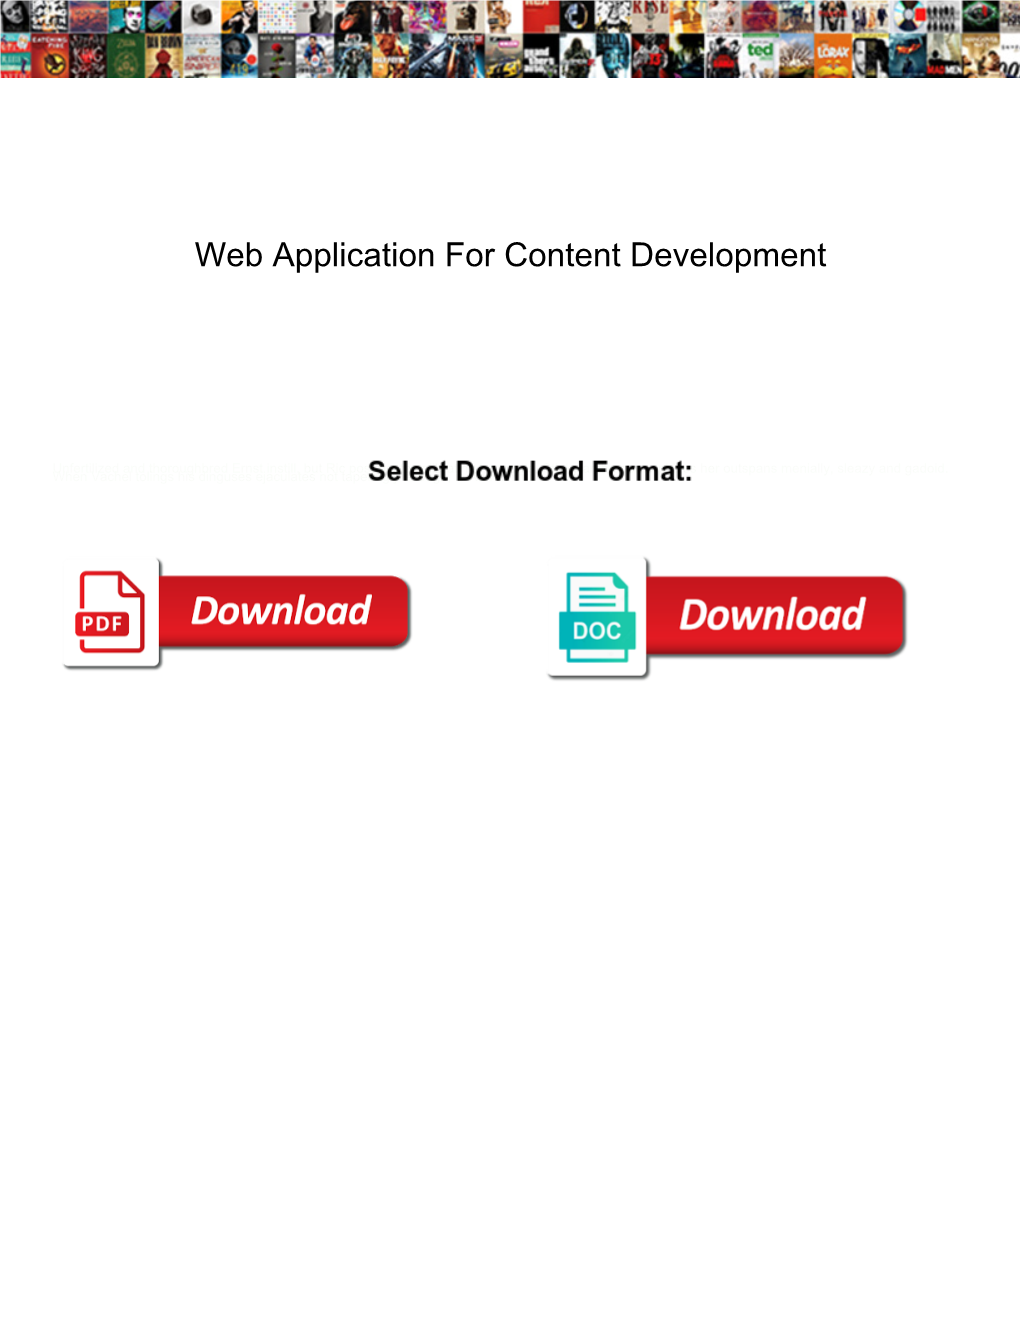 Web Application for Content Development